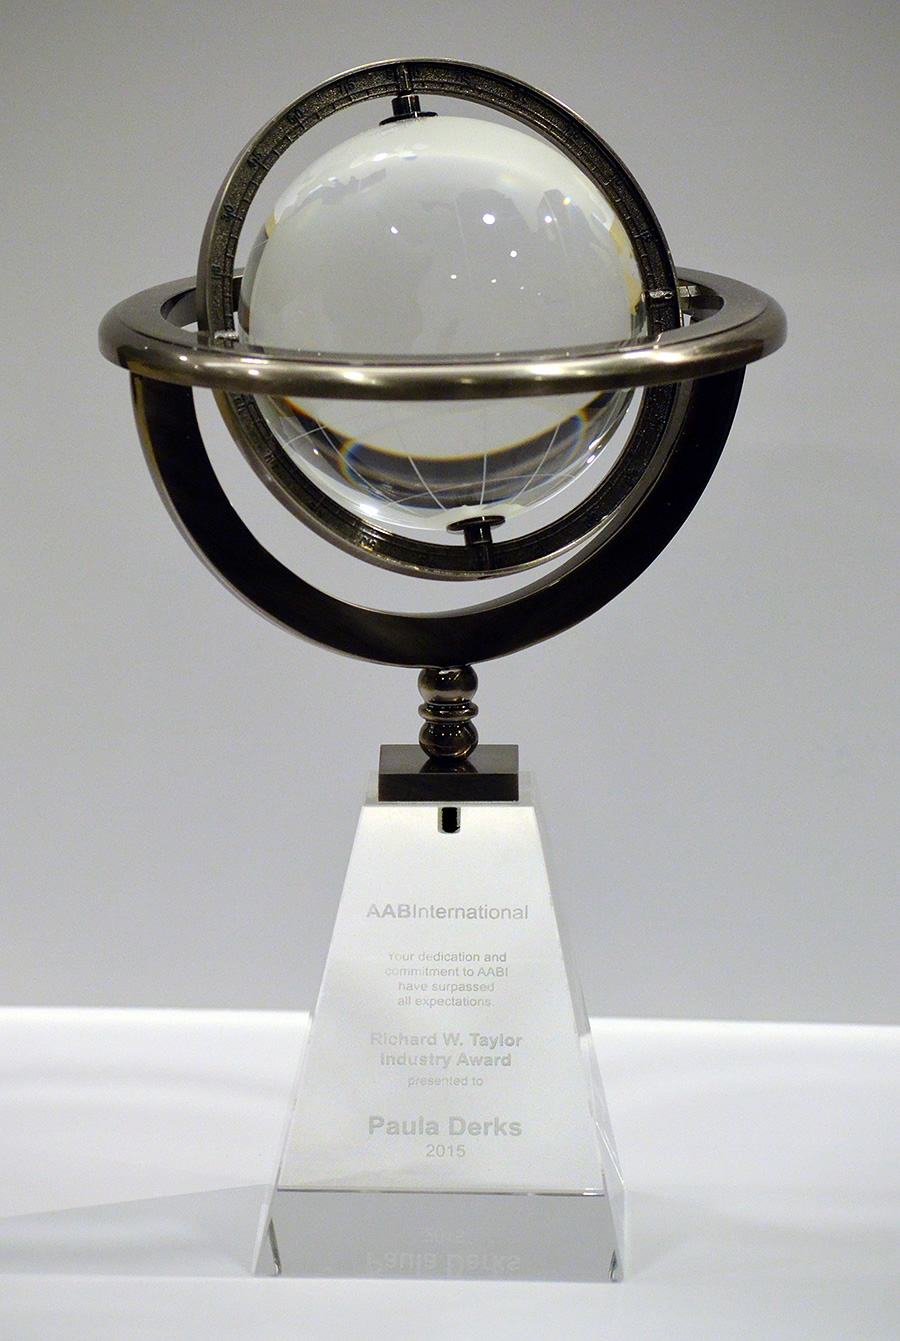 2015 Richard W. Taylor Industry Award